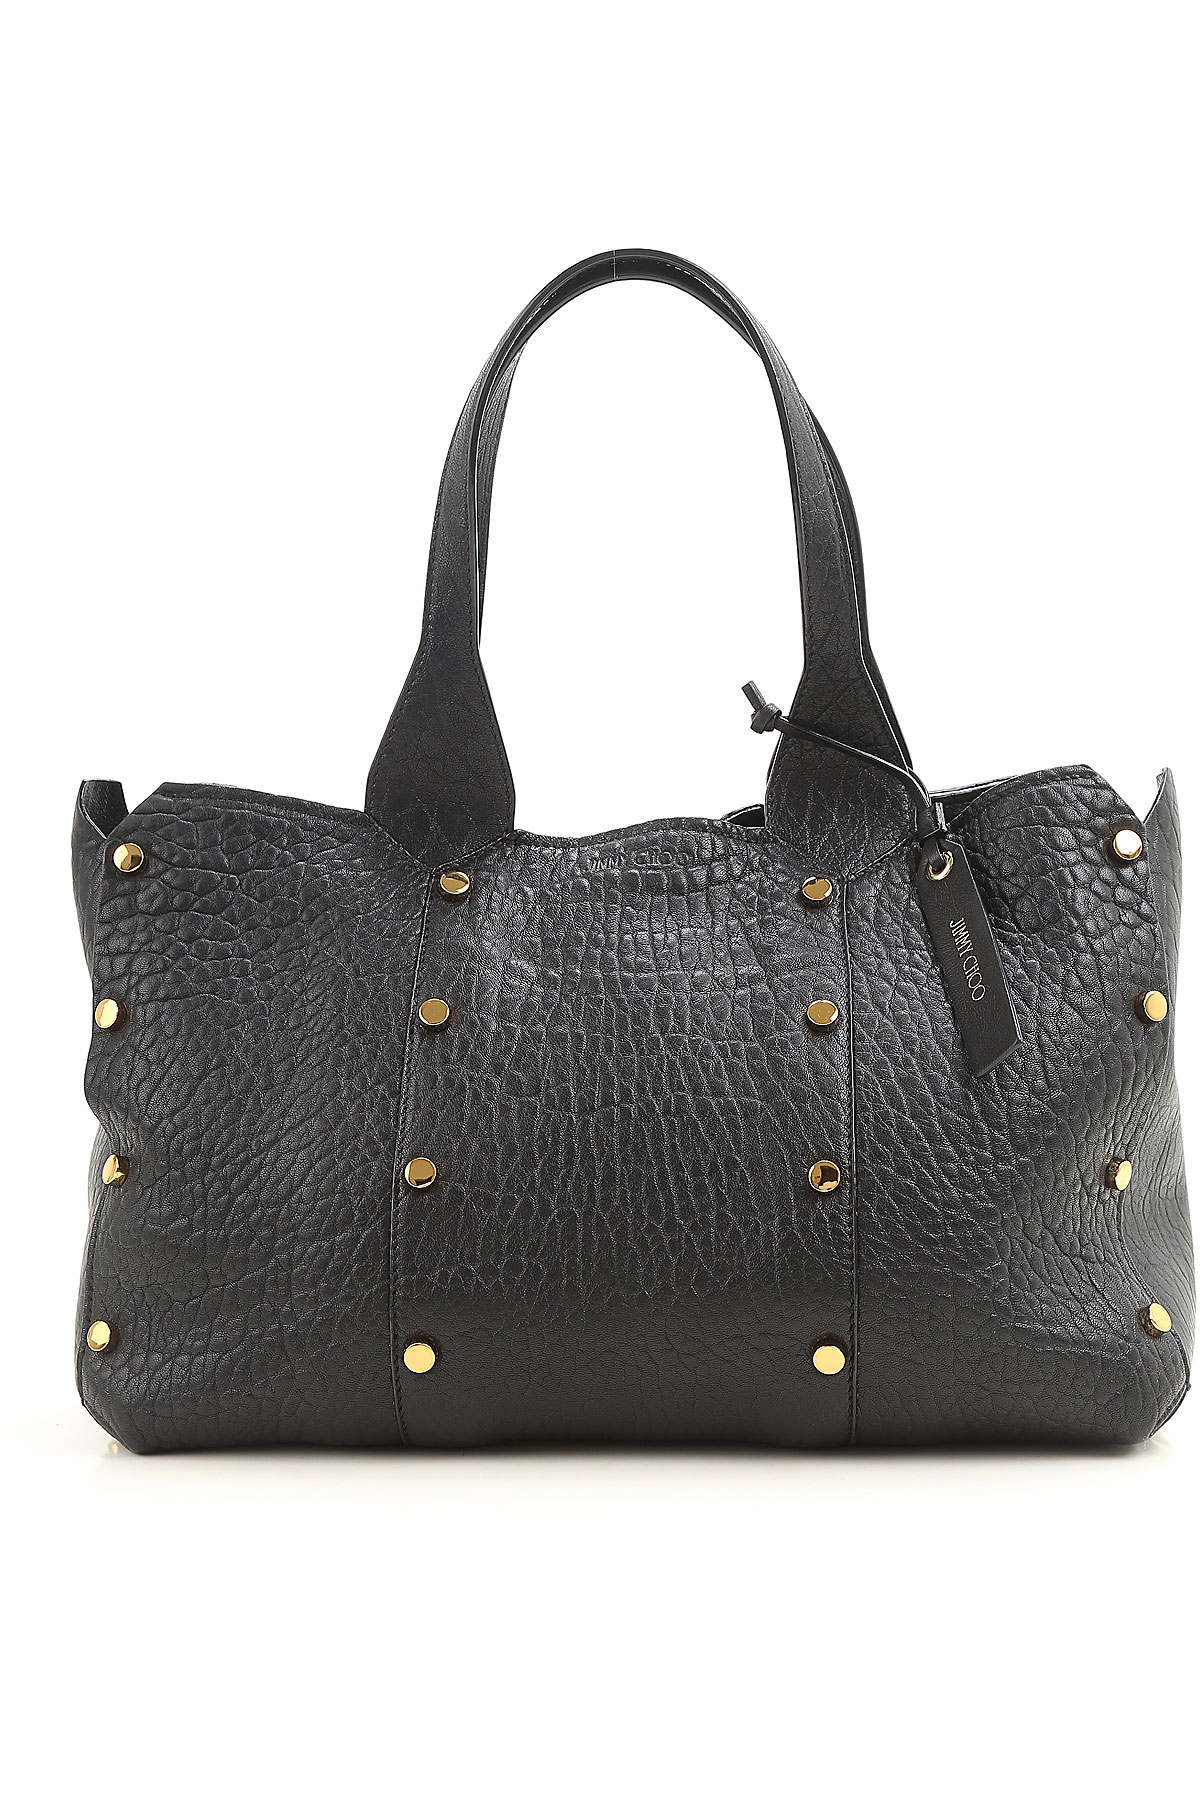 Handbags Jimmy Choo, Style code: lockett-gnl-black